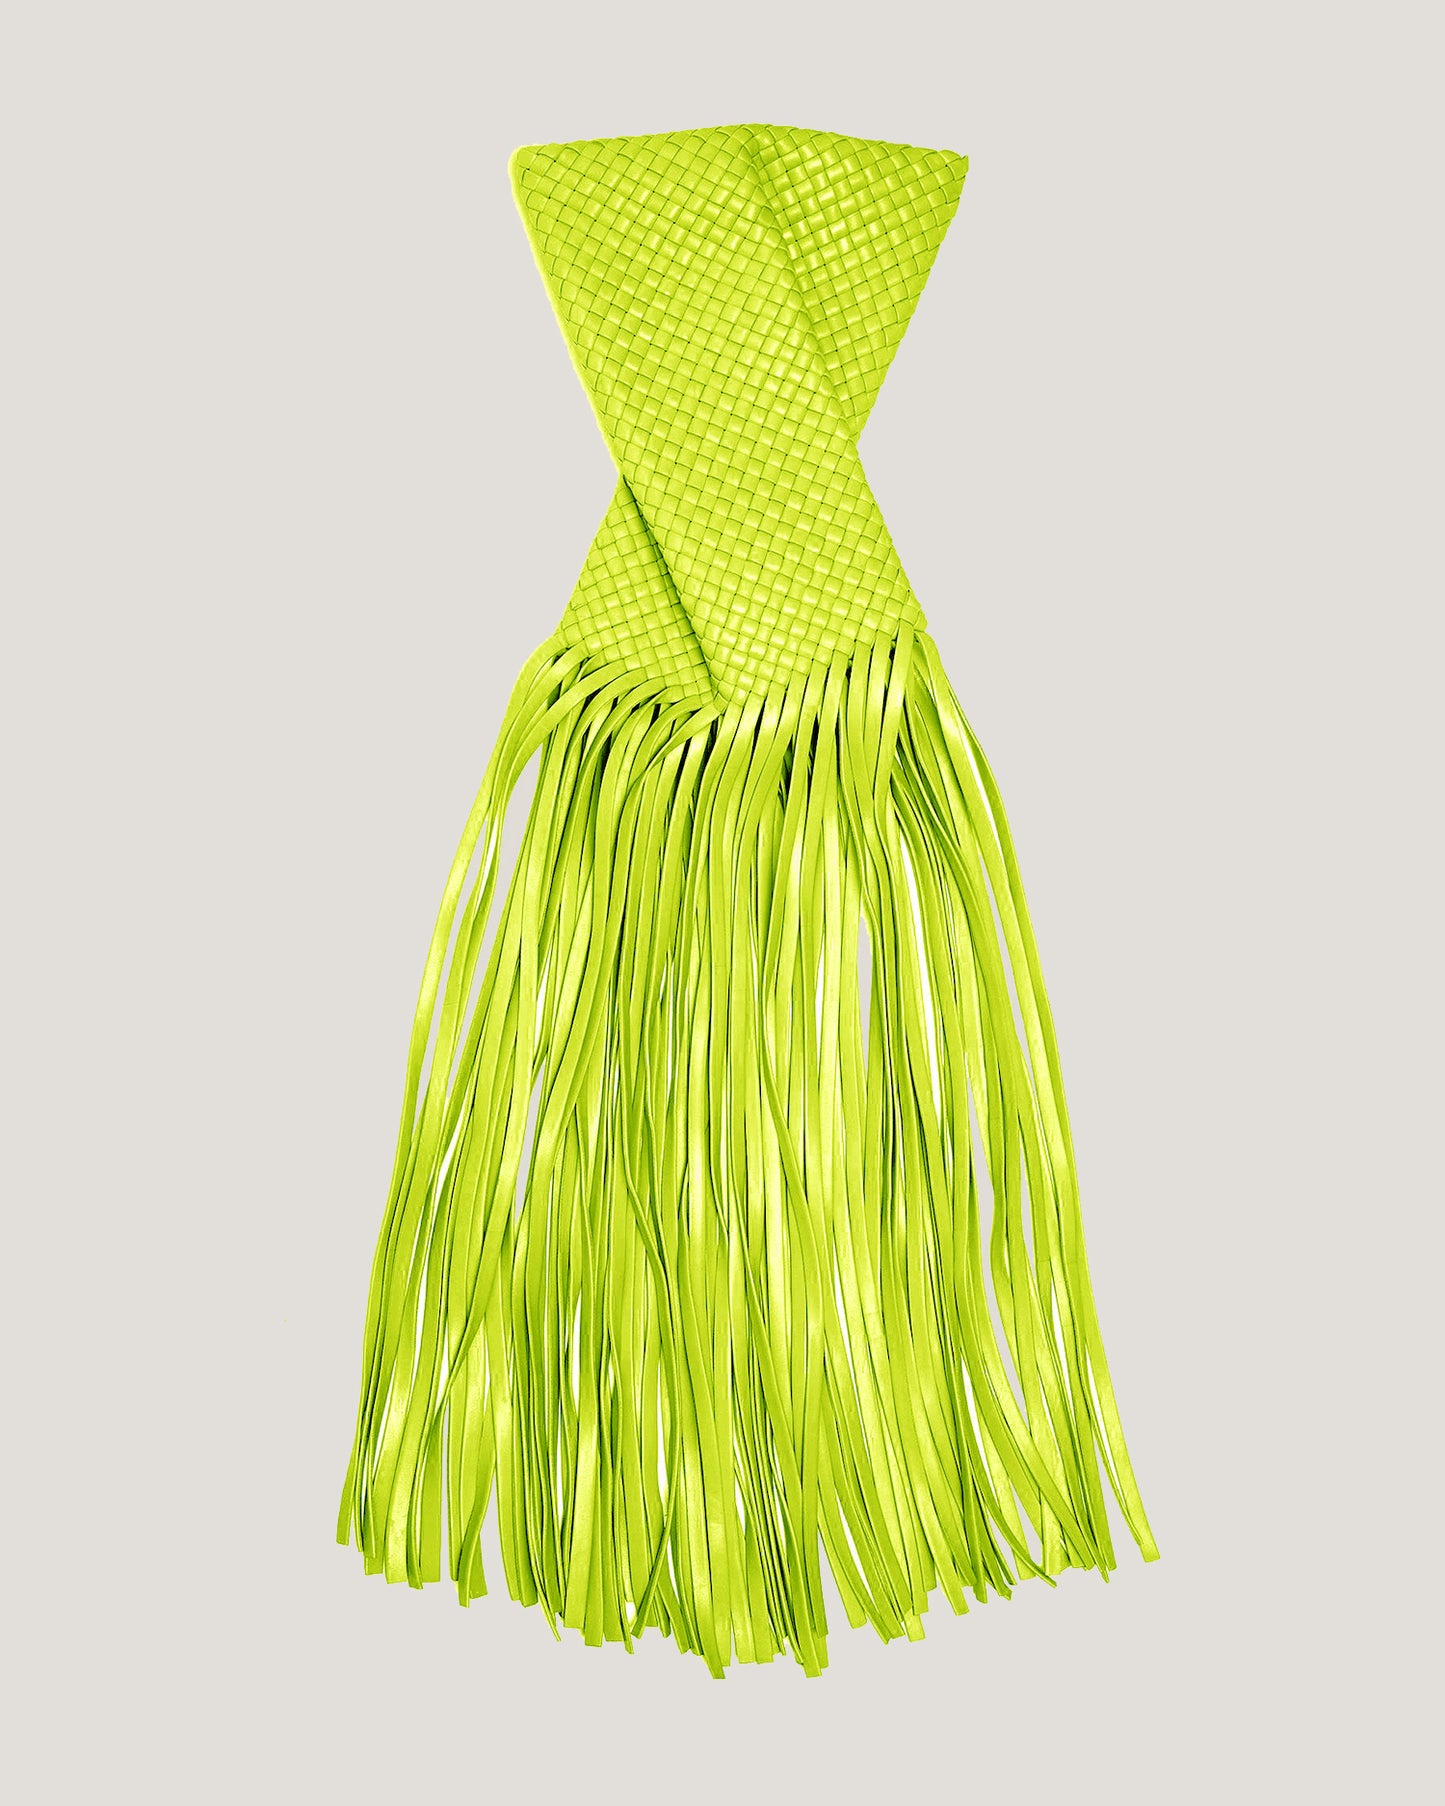 neon green weave fringe clutch PU leather bag *pre-order*